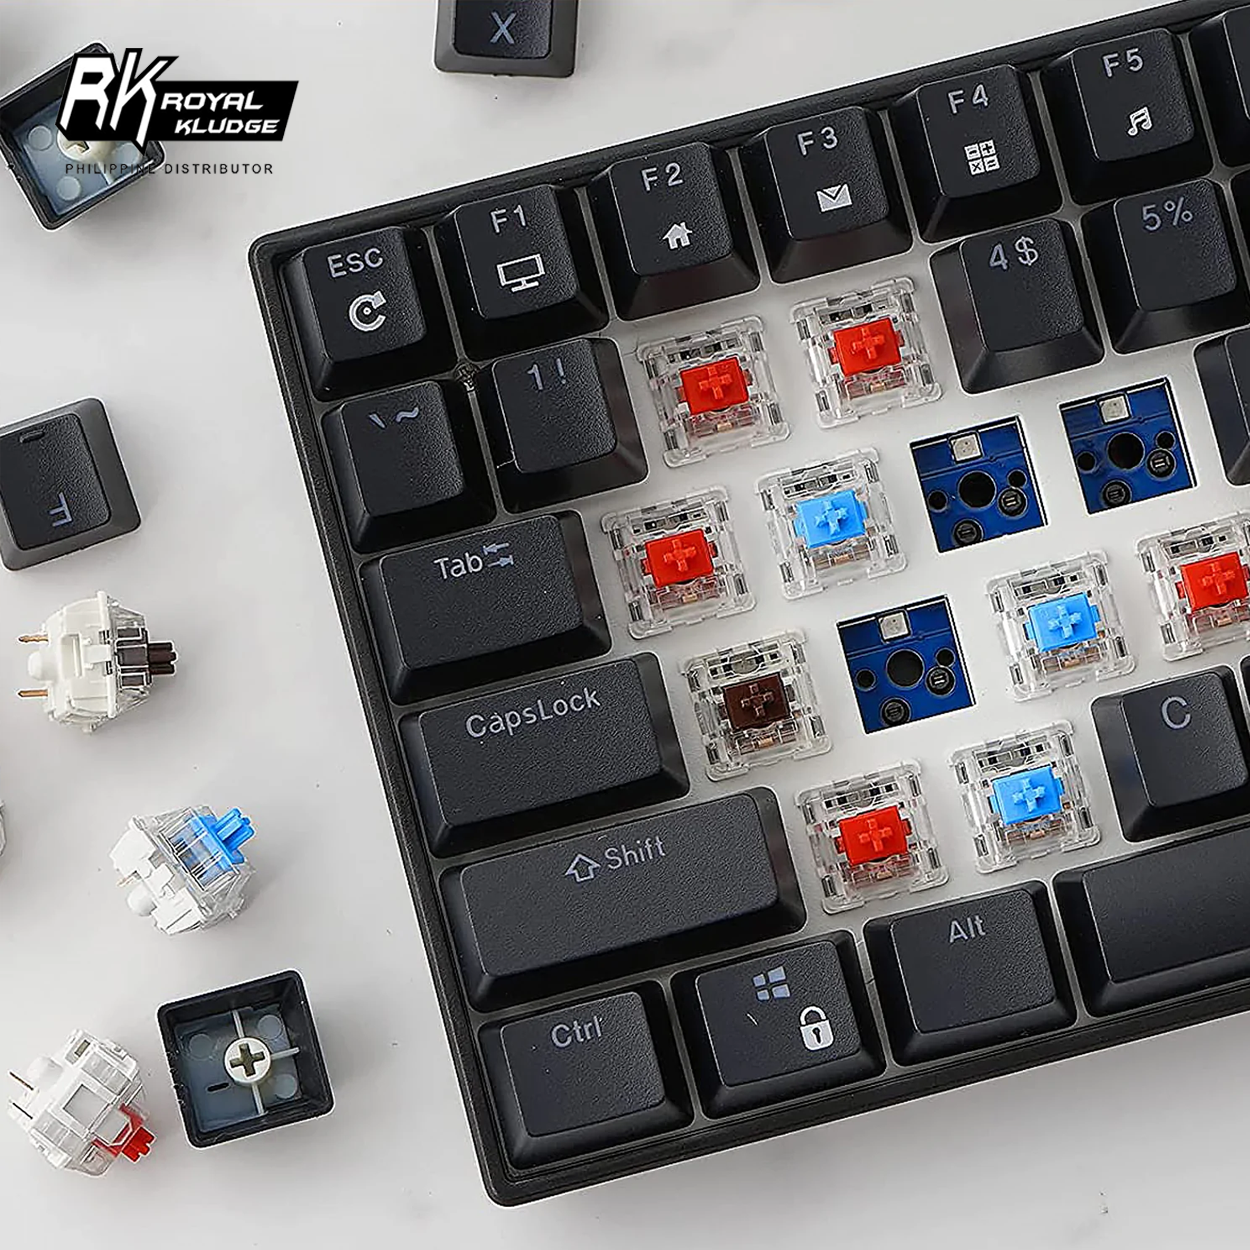 Royal Kludge RK100 96% Wireless Mechanical Gaming Keyboard